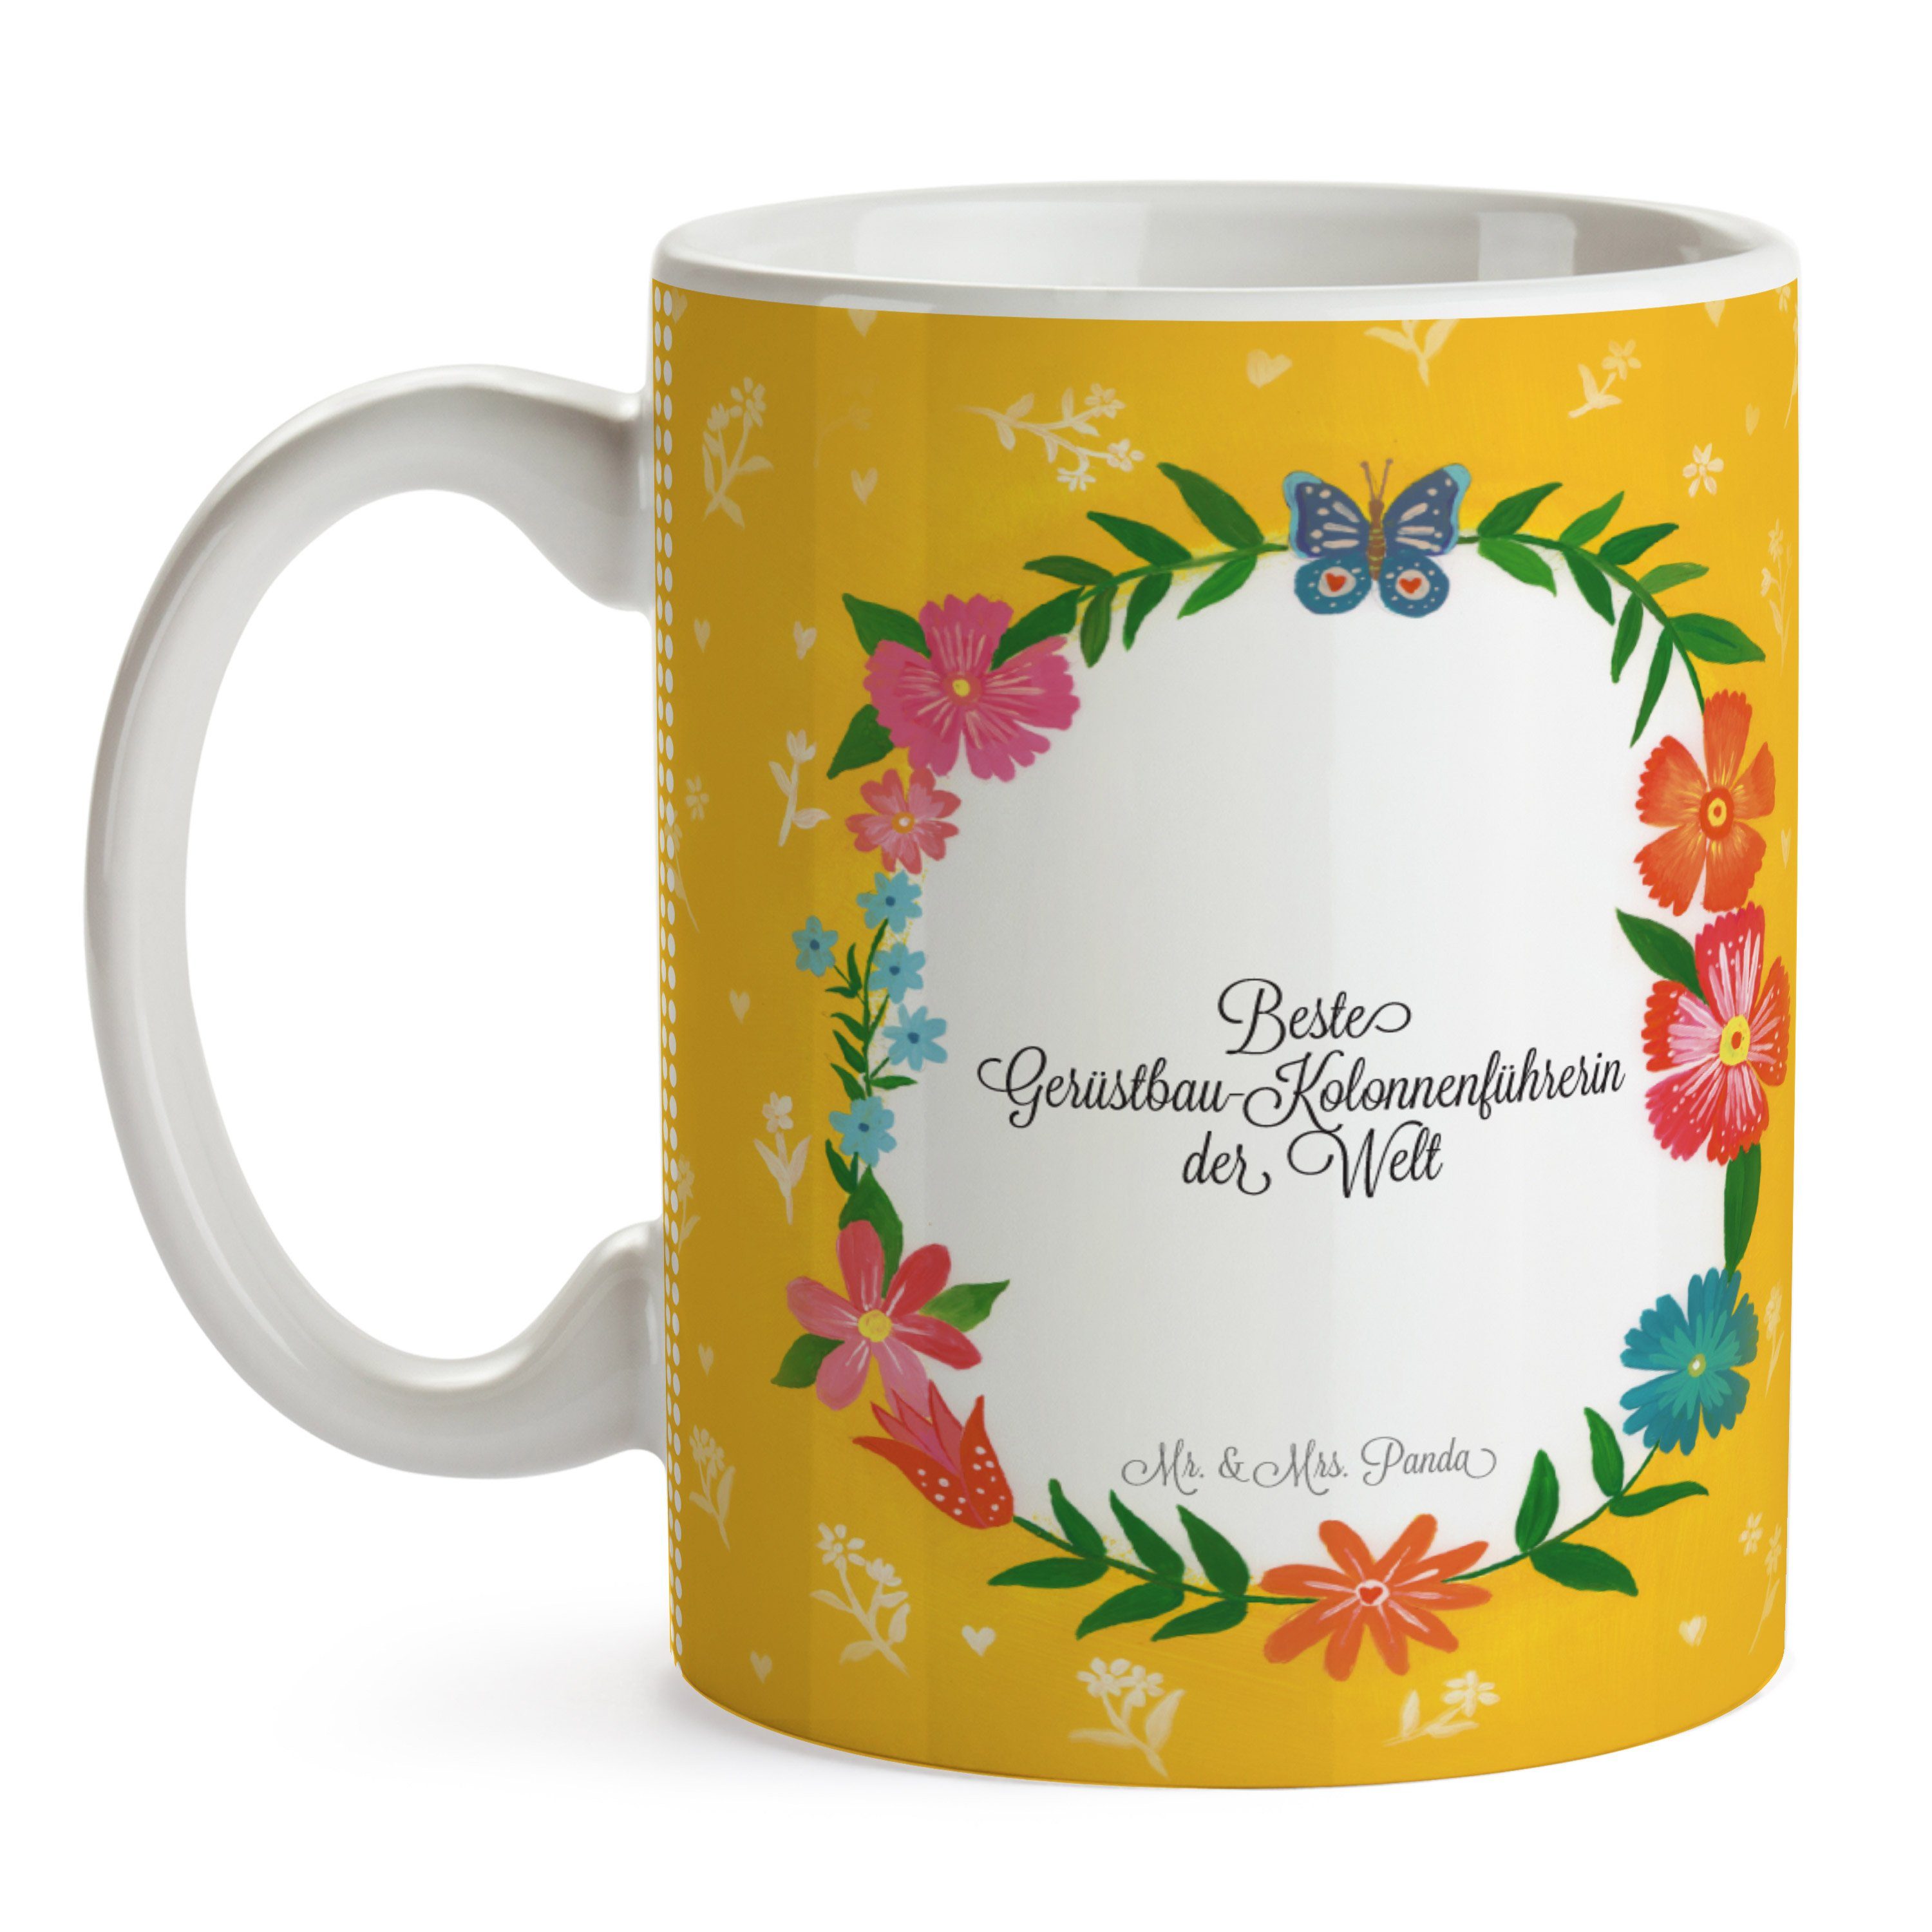 Mr. & Mrs. Panda Kaffeetasse, Tass, Tasse Keramik Gerüstbau-Kolonnenführerin Geschenk, - Gratulation